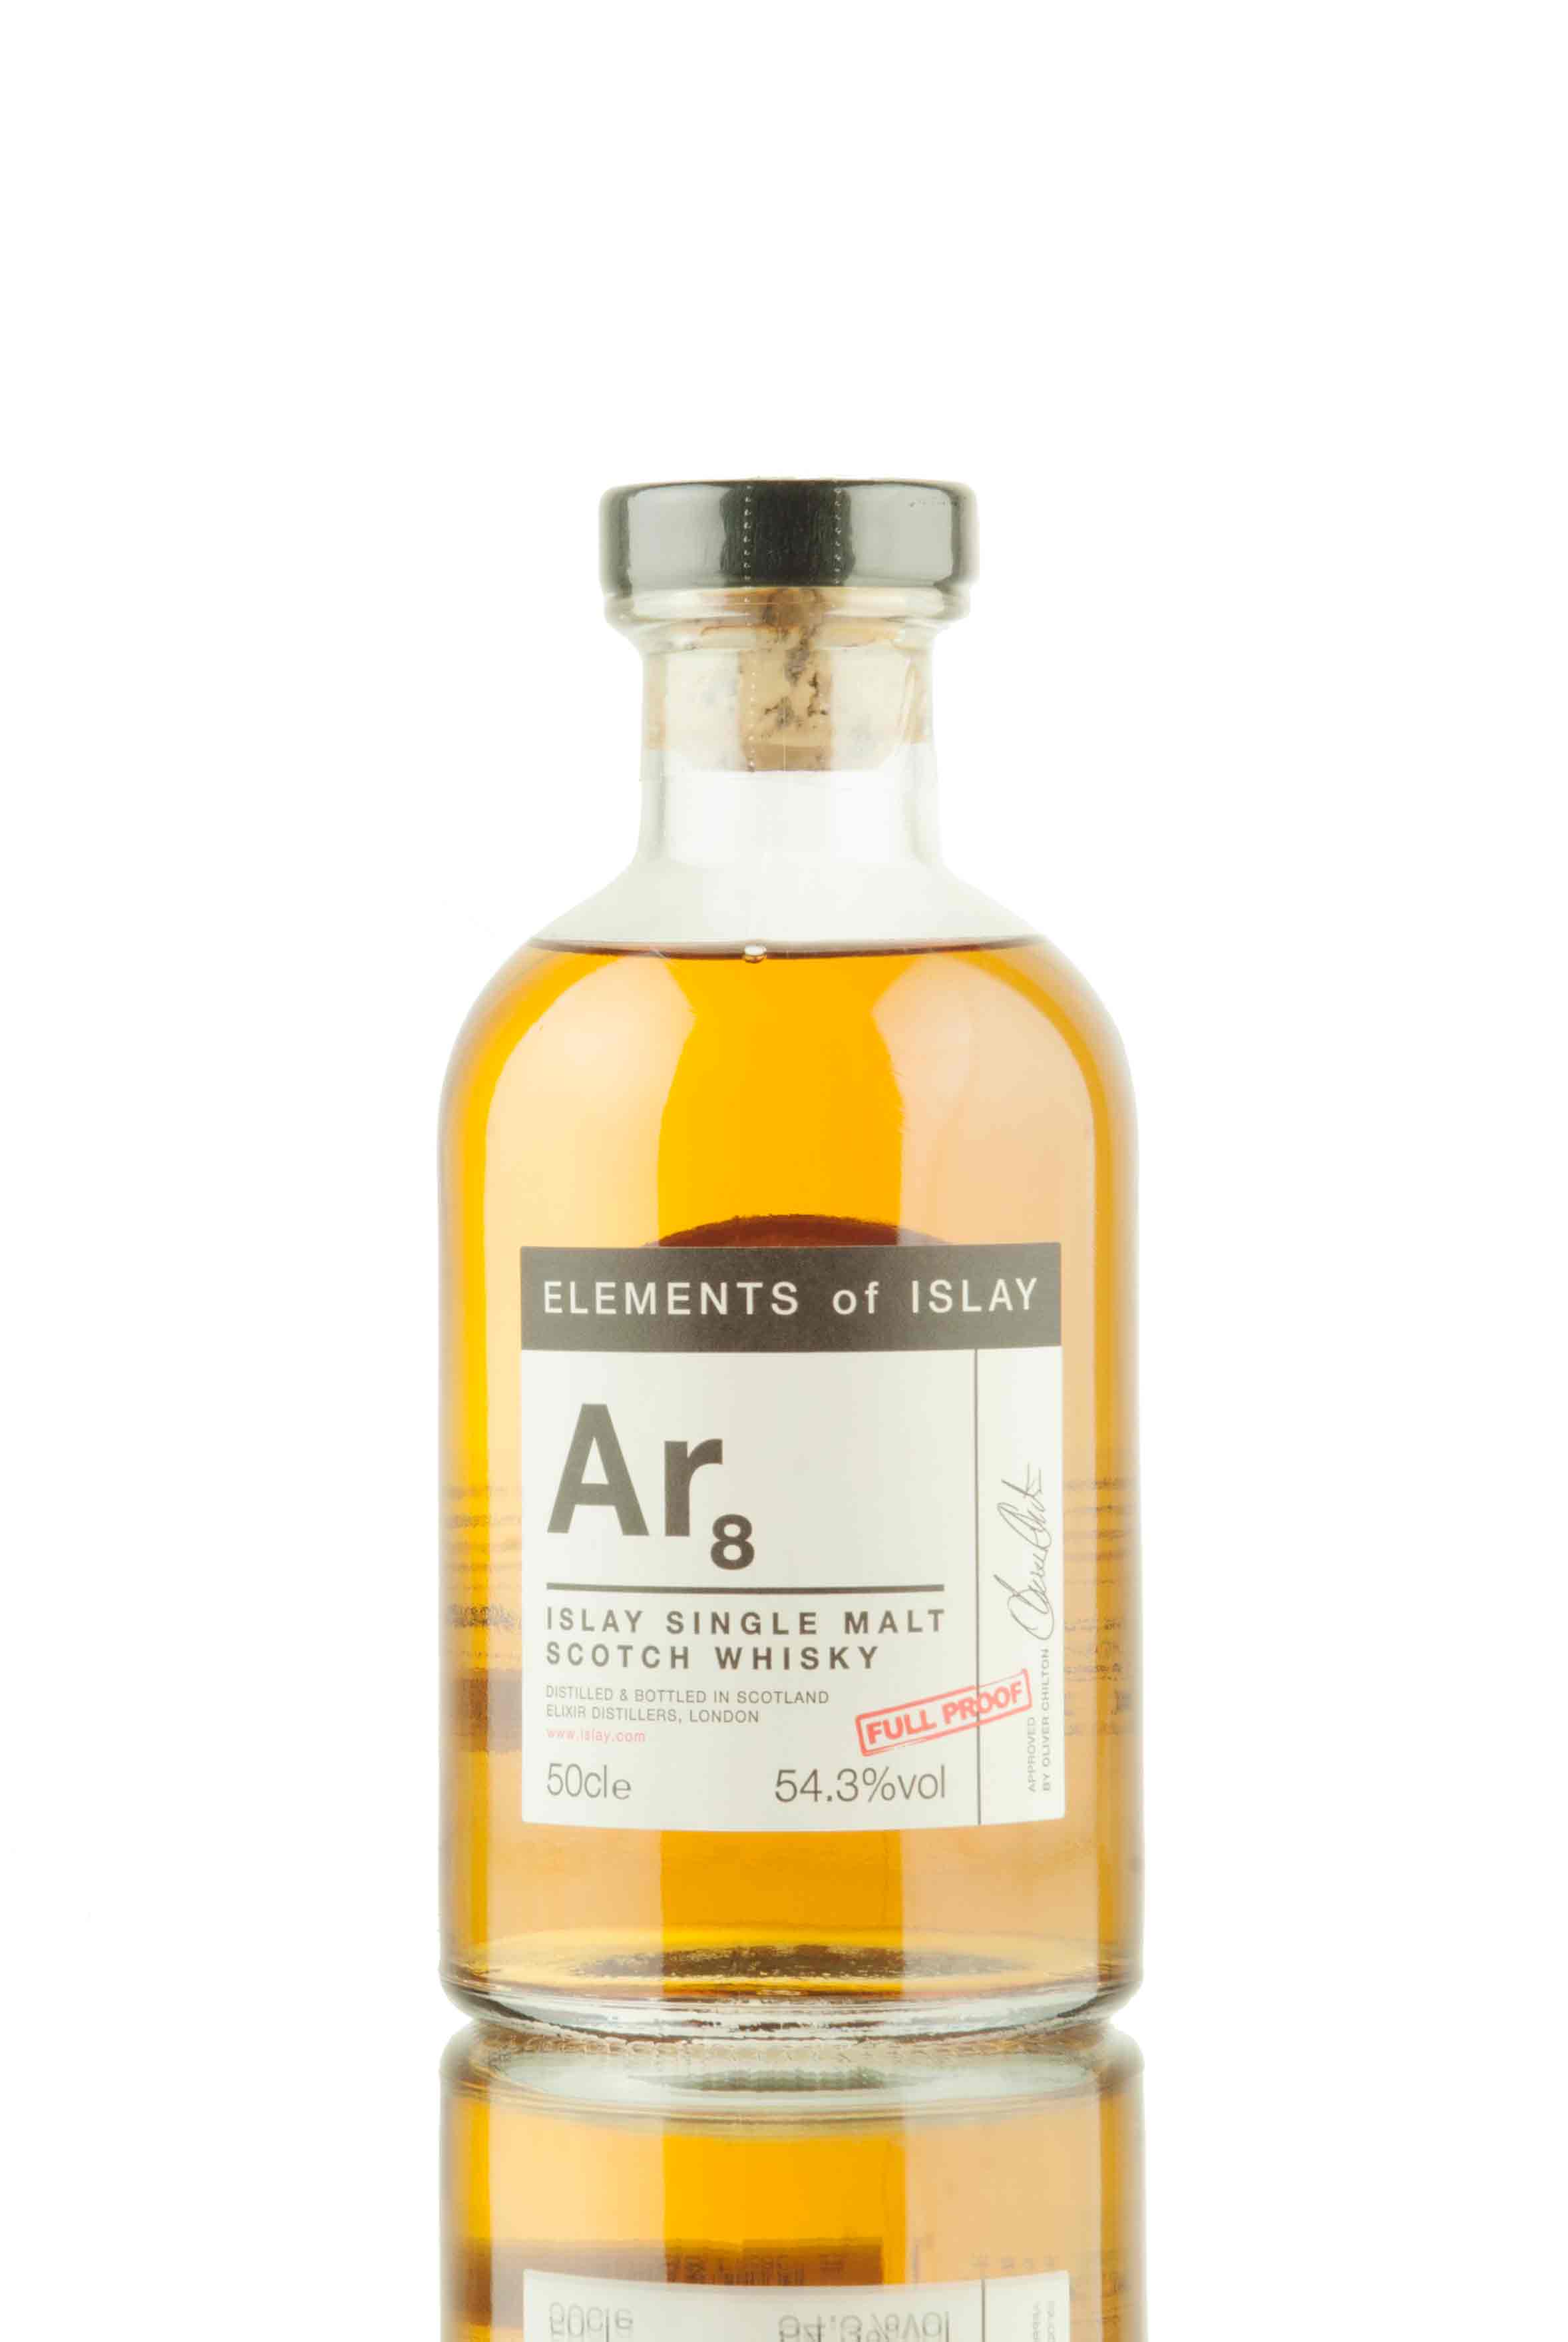 Ar8 - Elements of Islay (Ardbeg)